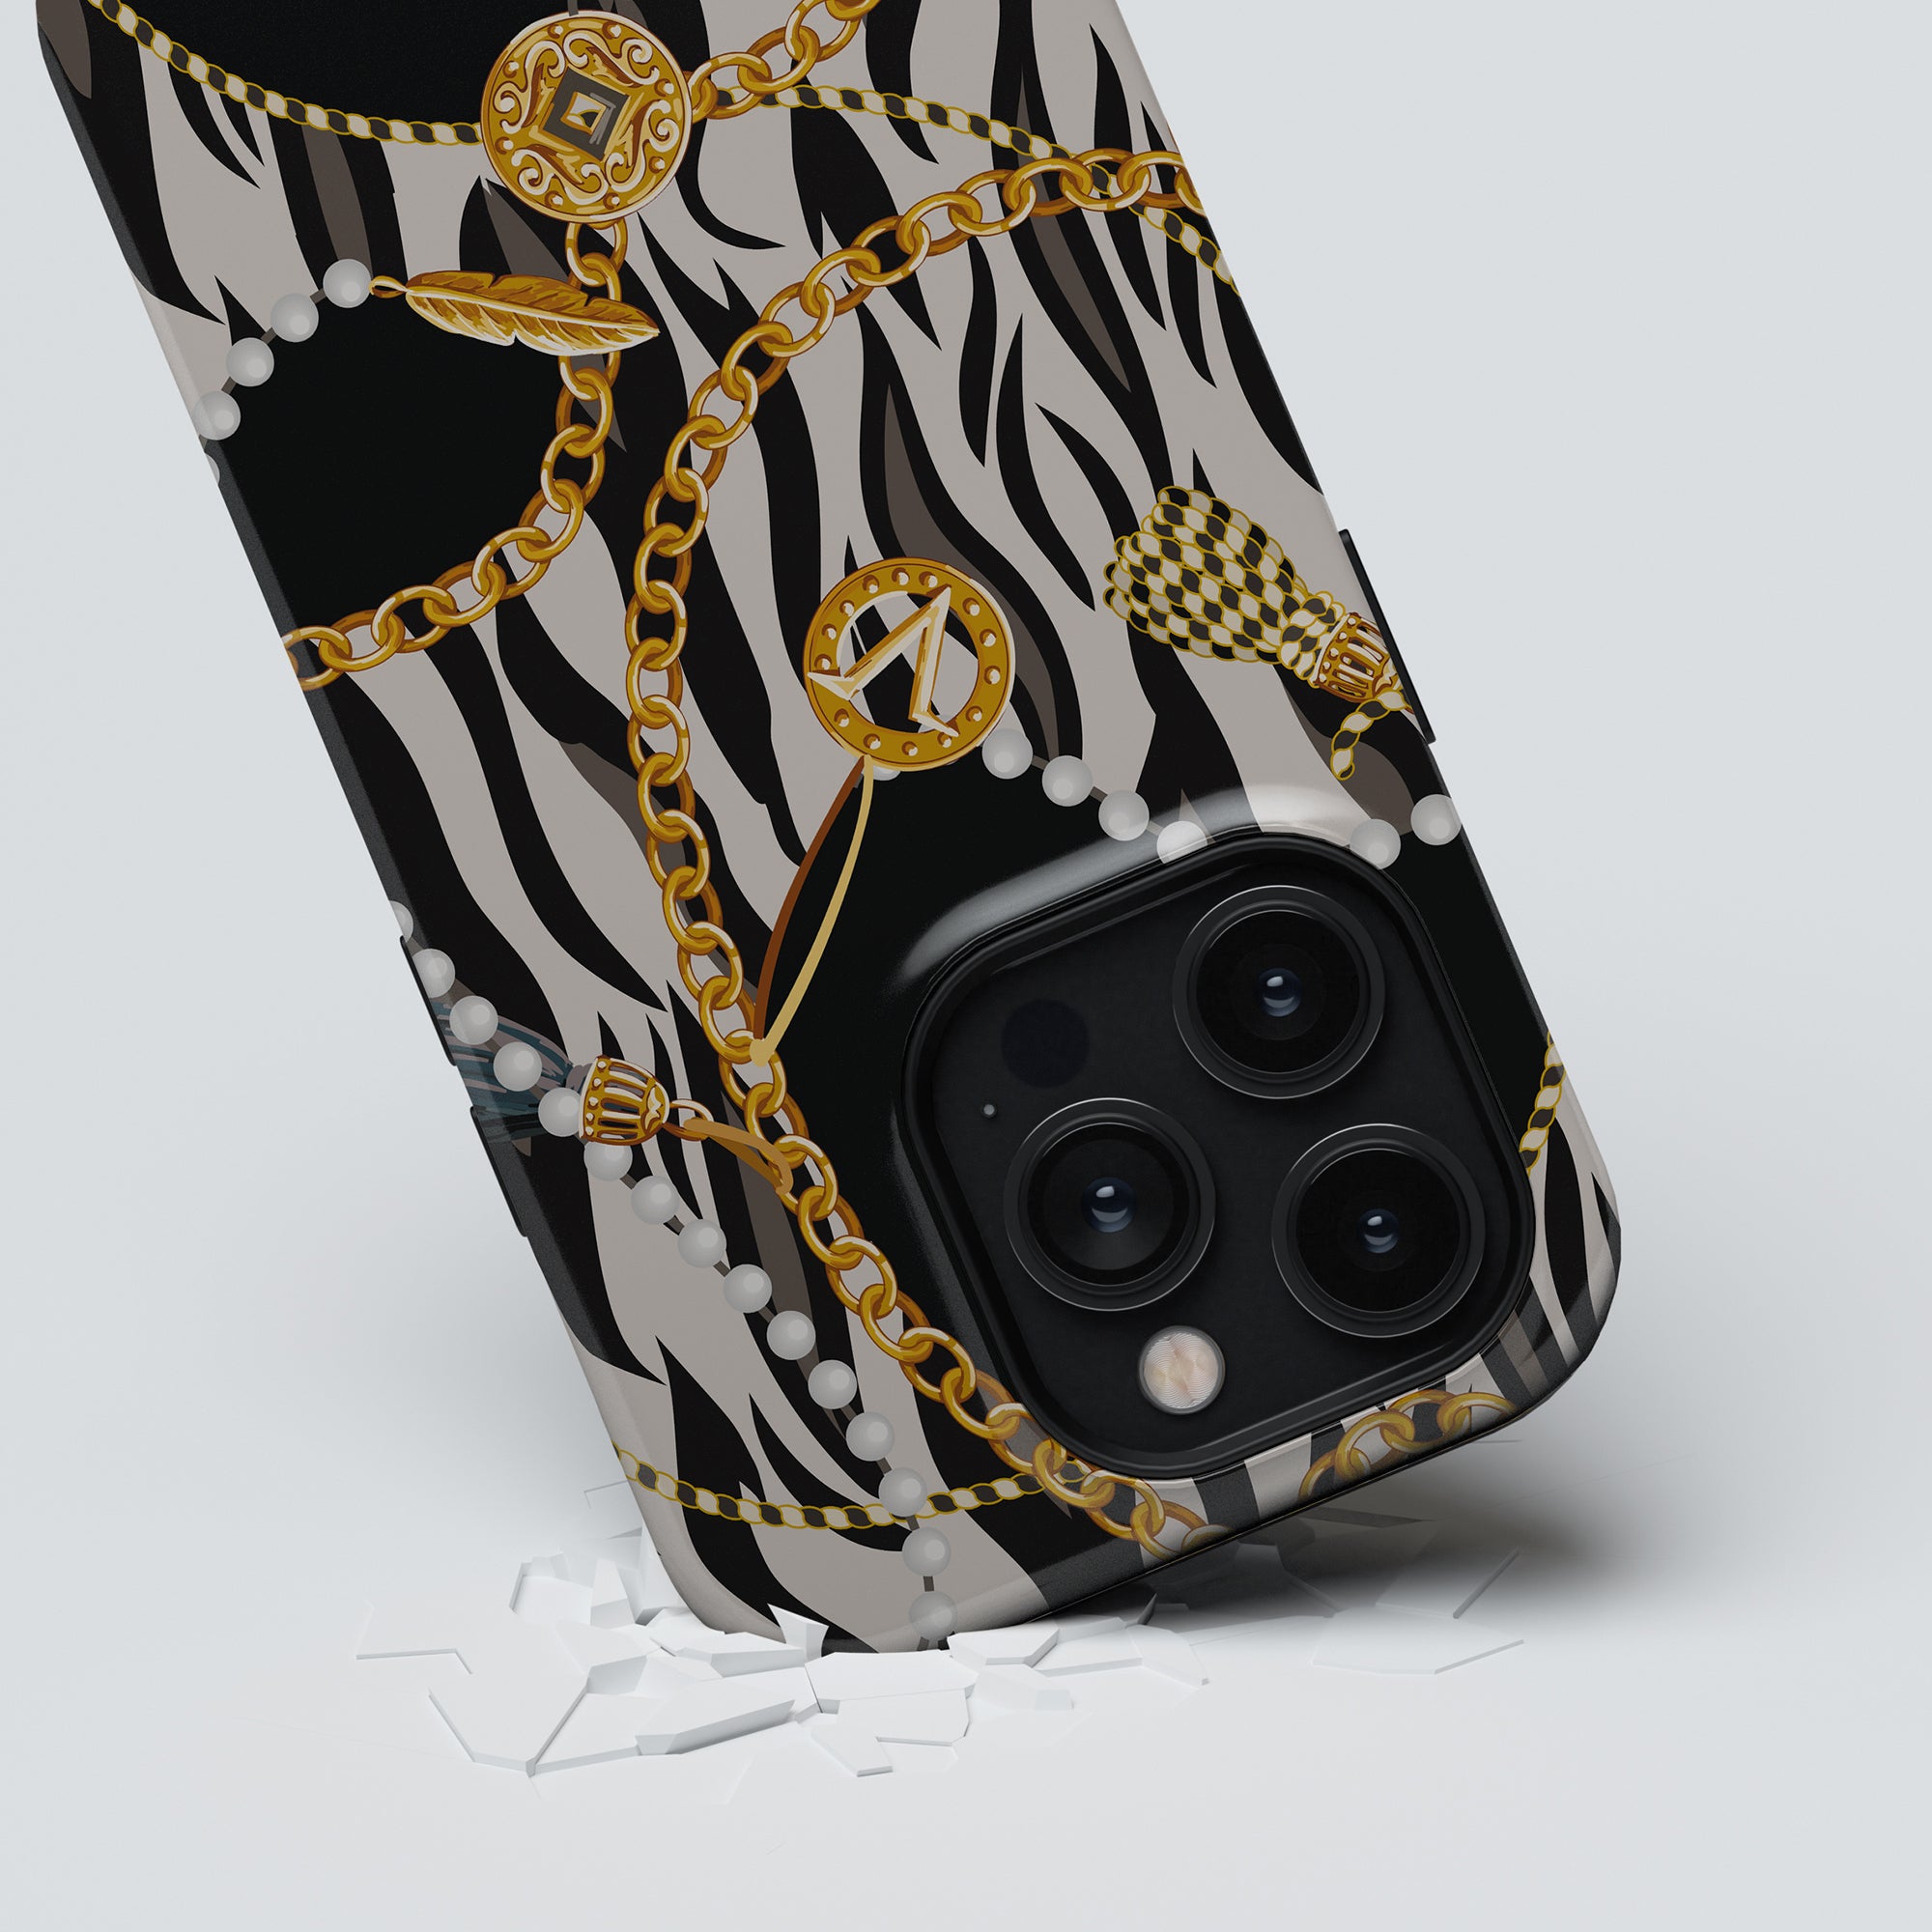 A Roar Swedens Bling - Tufft fodral med zebratryck och guldkedjor, vilket ger din smartphone ett lyxigt lyft.